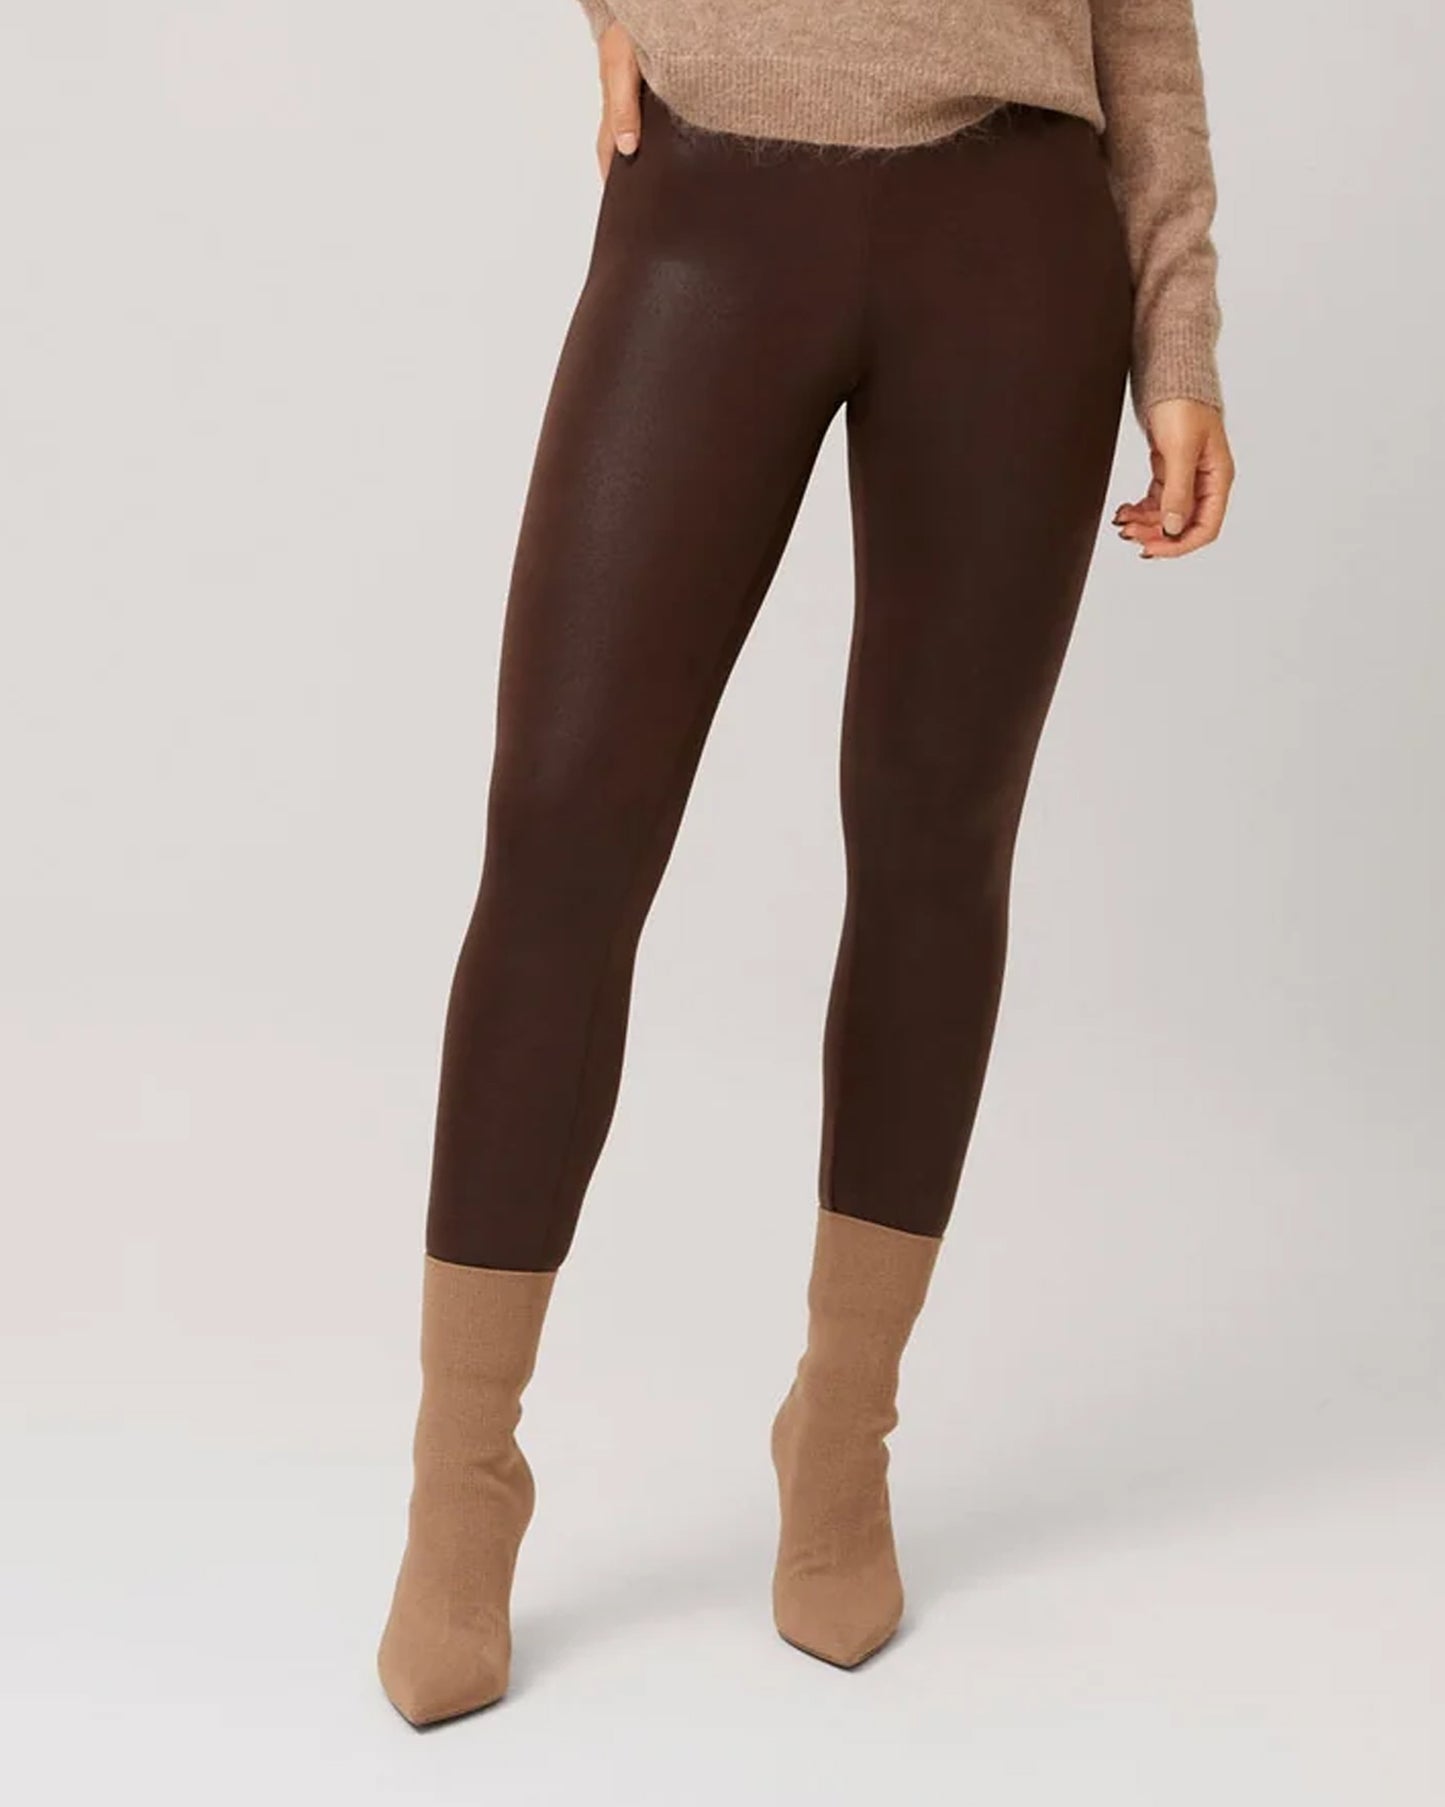 Ysabel Mora 70293 Waxed Thermal Leggings - Brown high waisted thermal trouser leggings with waxed effect print and warm plush fleece lining.